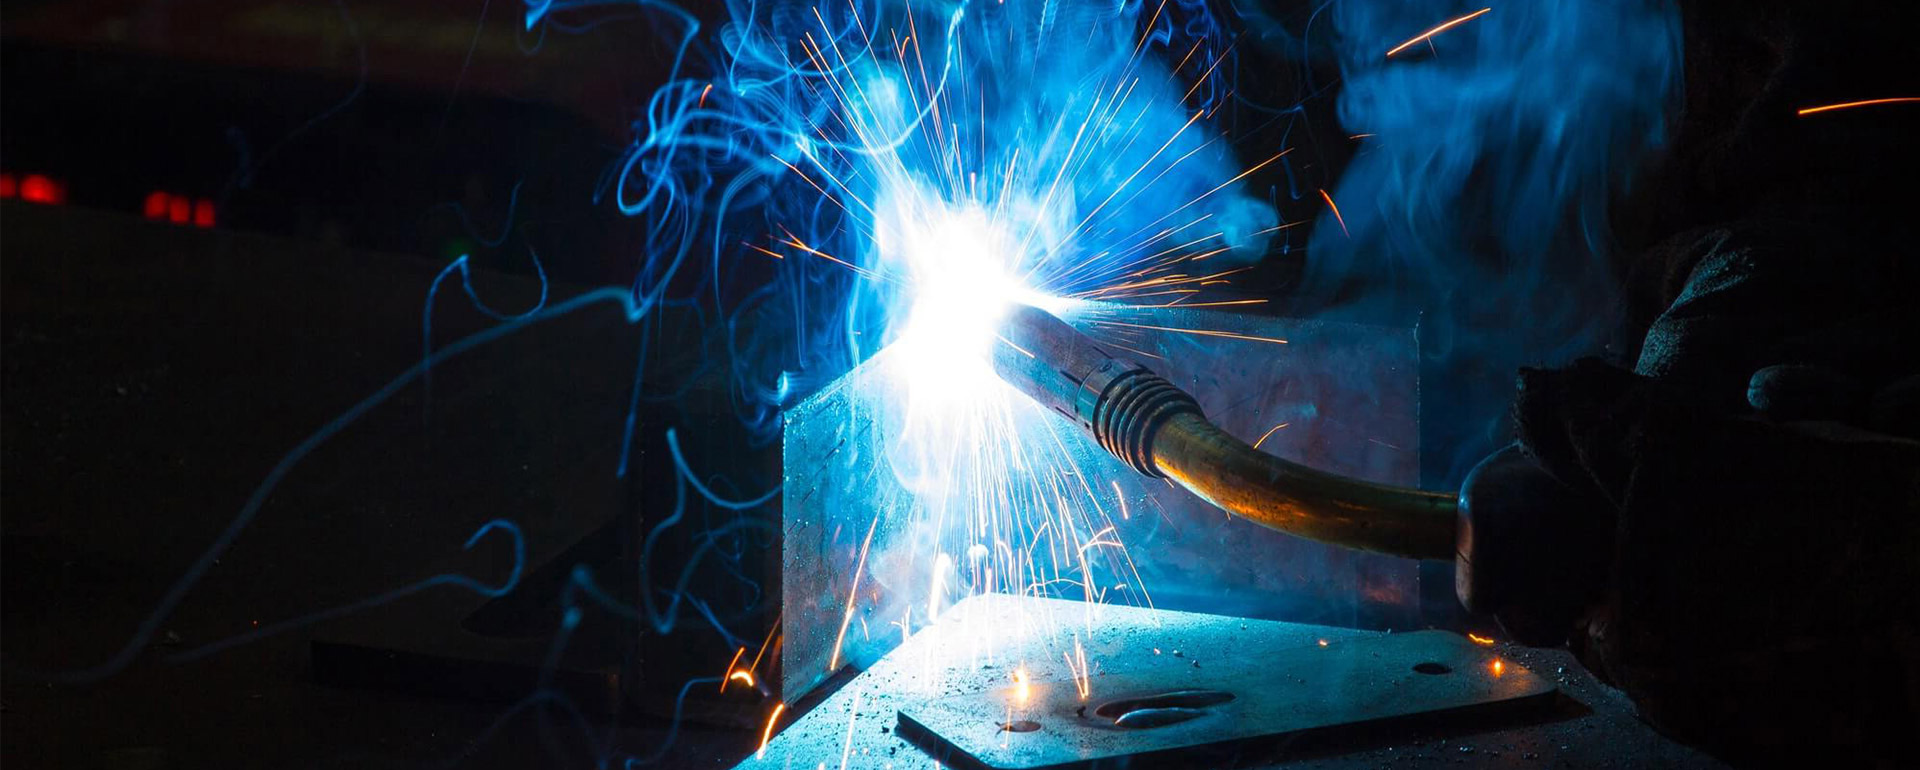 professional welding&cutting